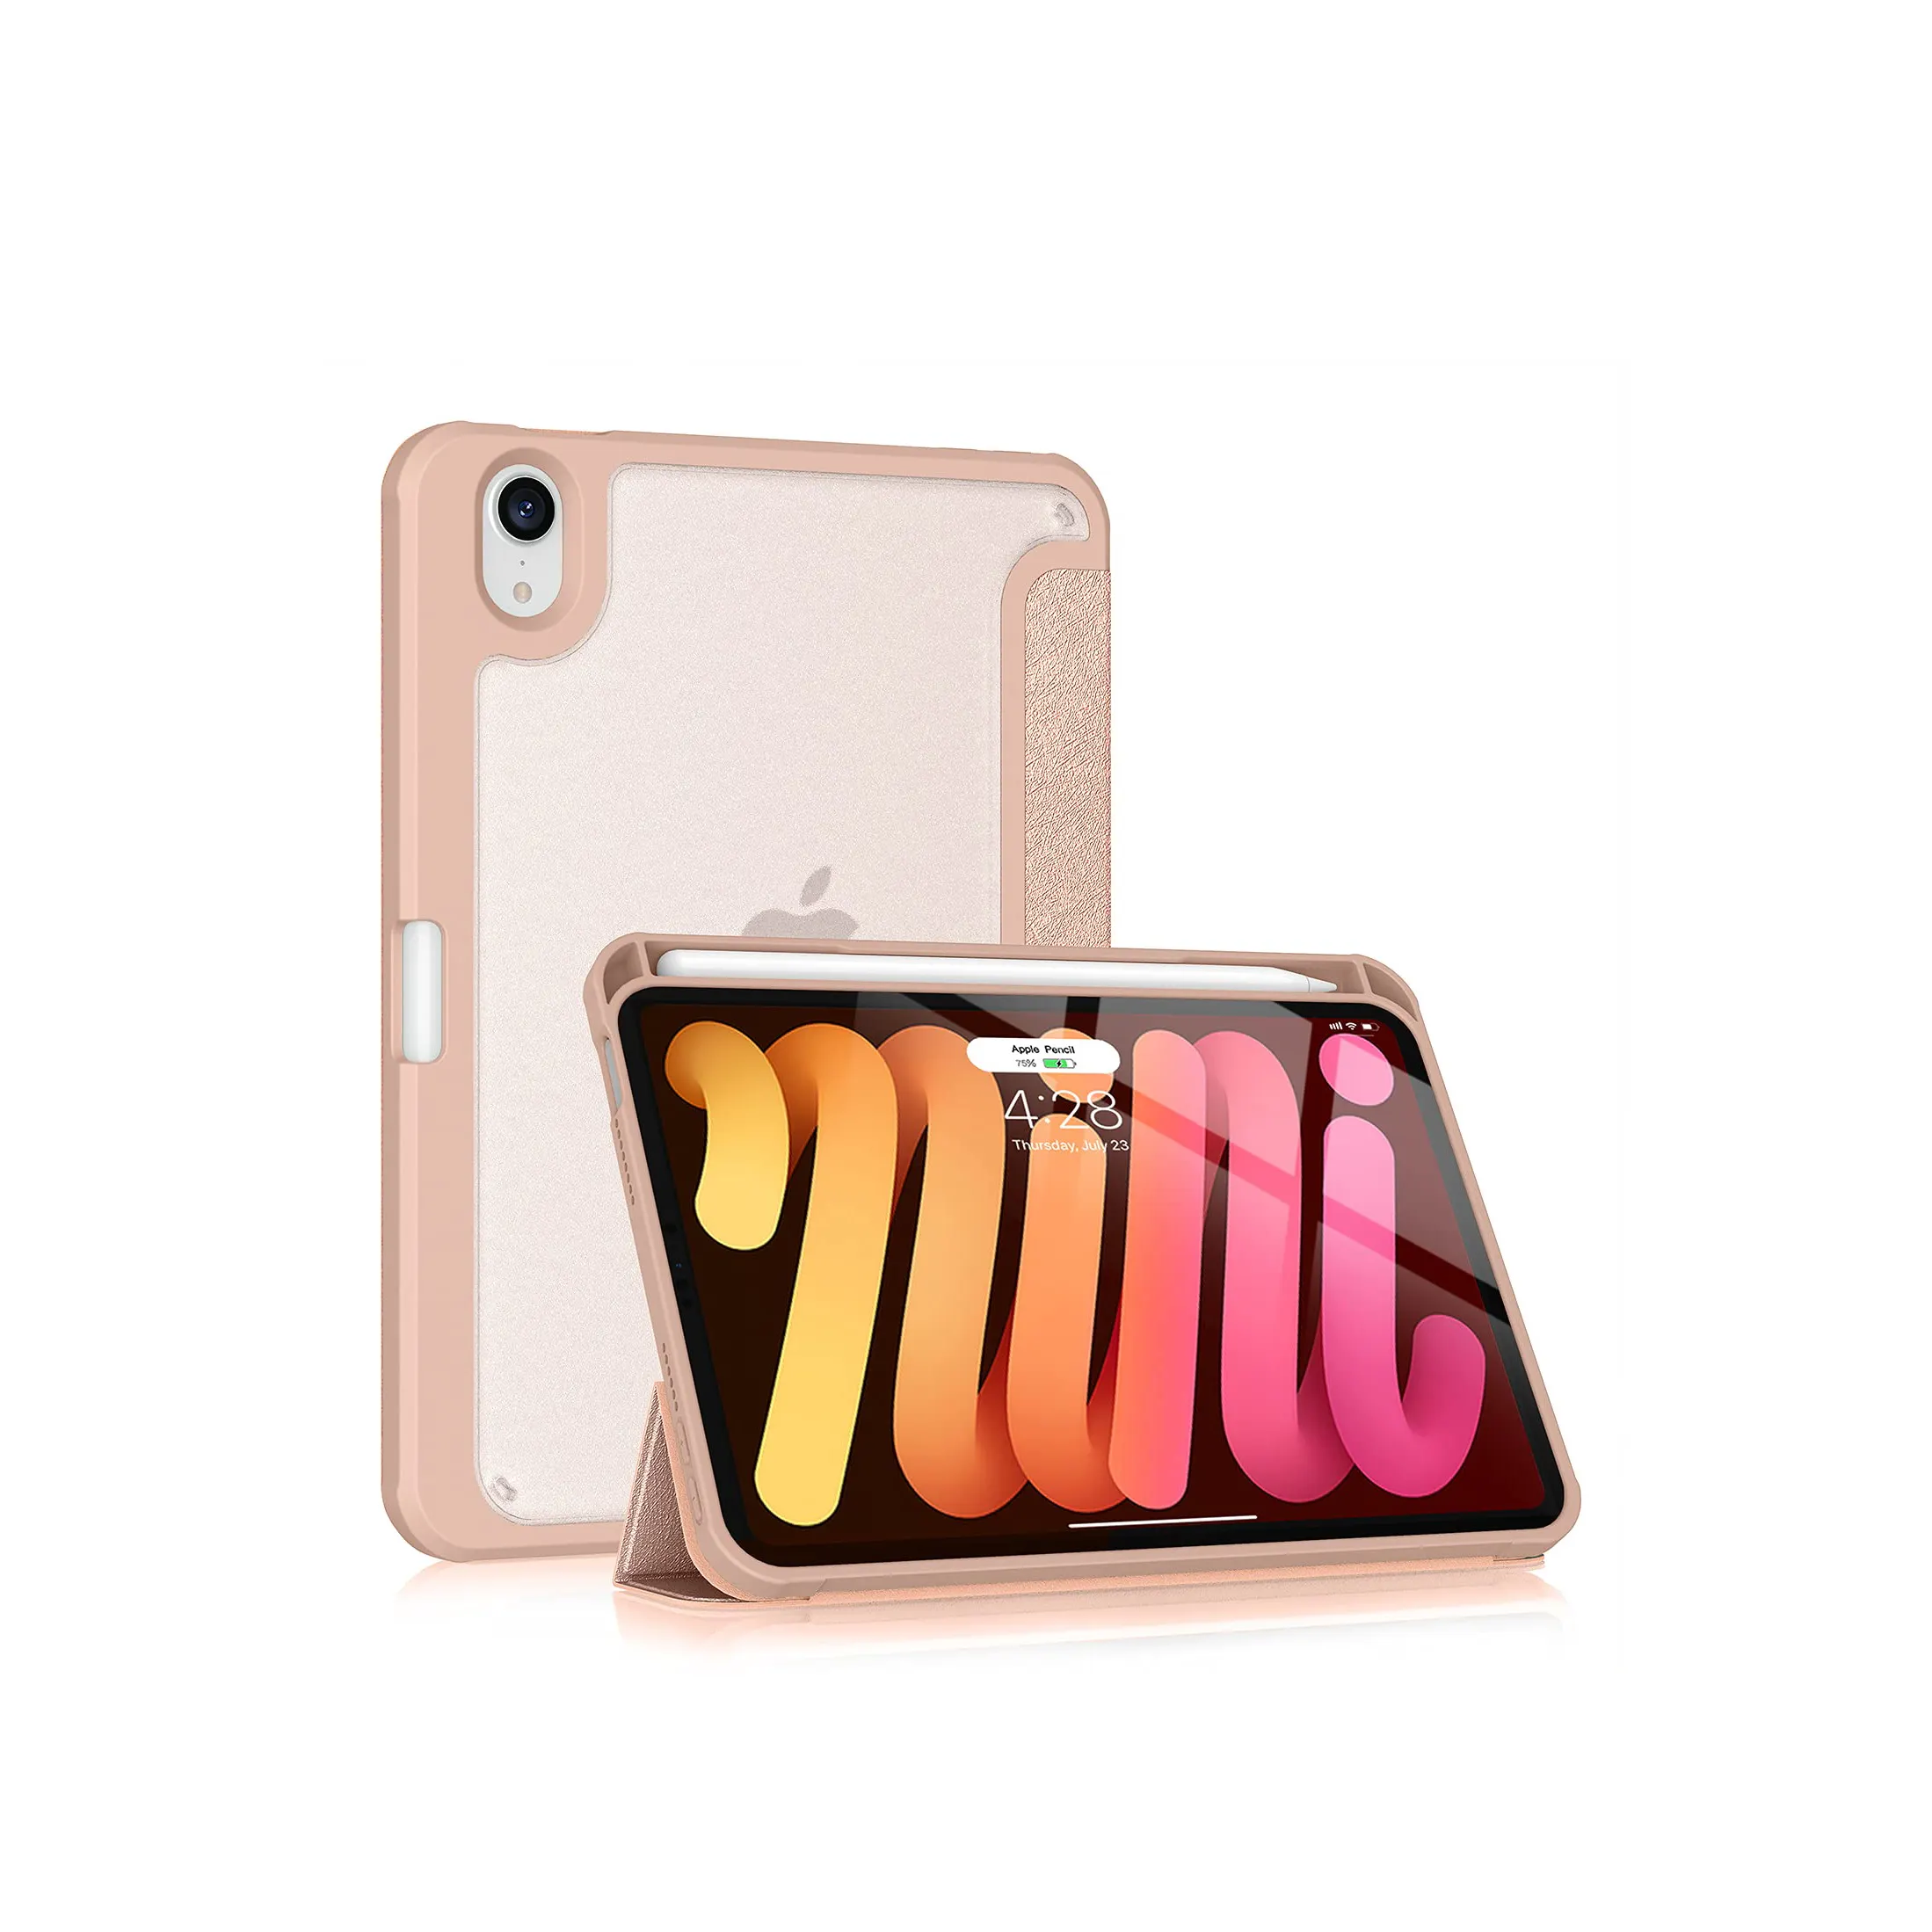 Factory ipad mini 6 tablet case shockproof case for ipad mini 1/2/3/4 ipad mini 6 case pink